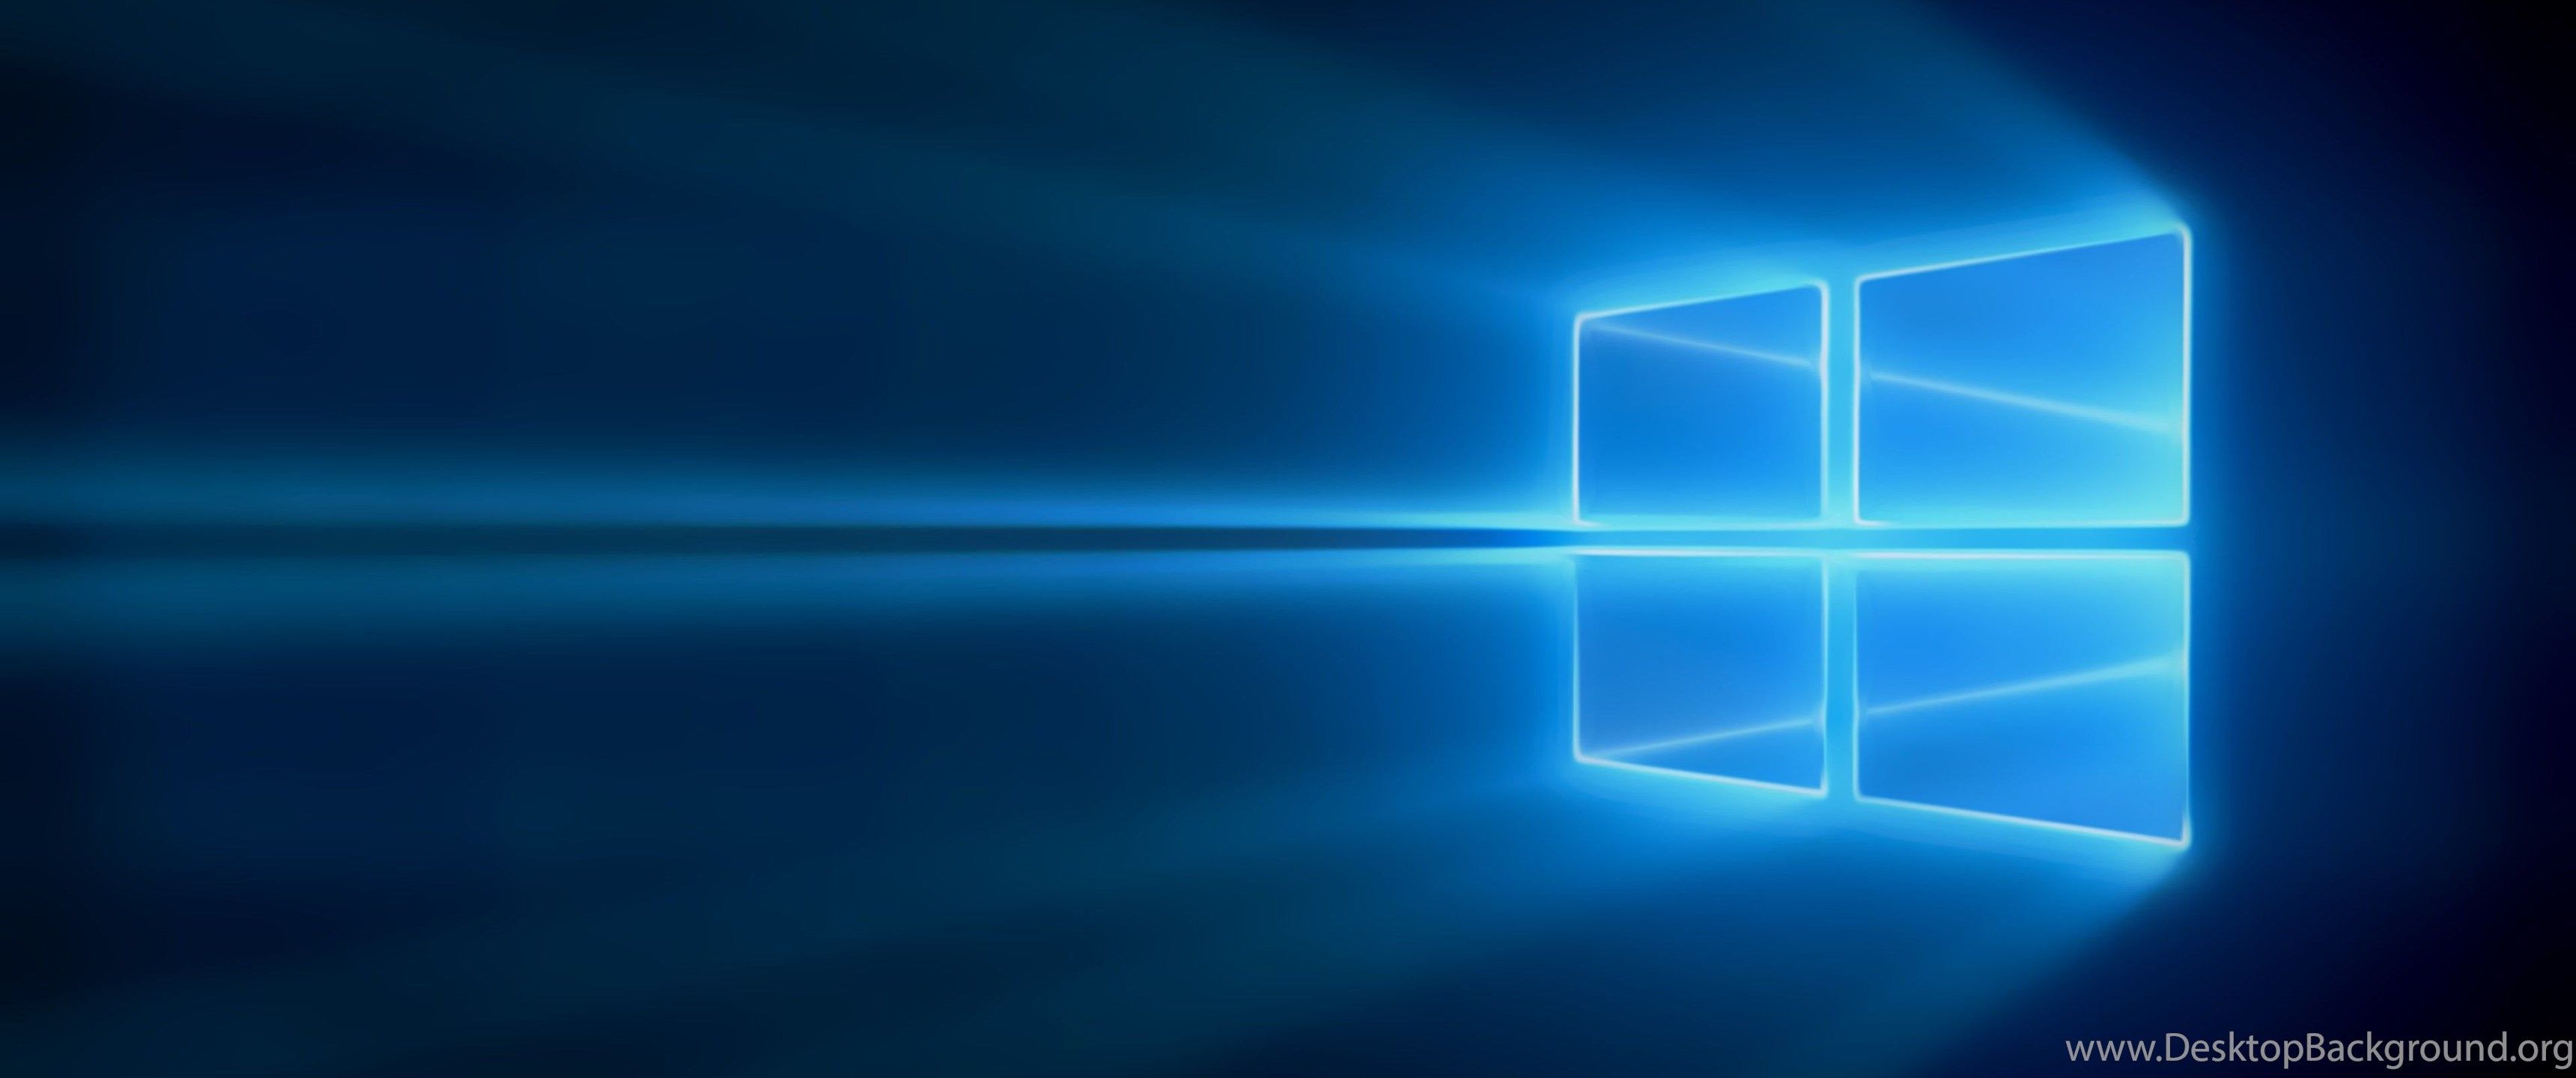 Download Windows 10 Wallpaper Photo Background Desktop Background